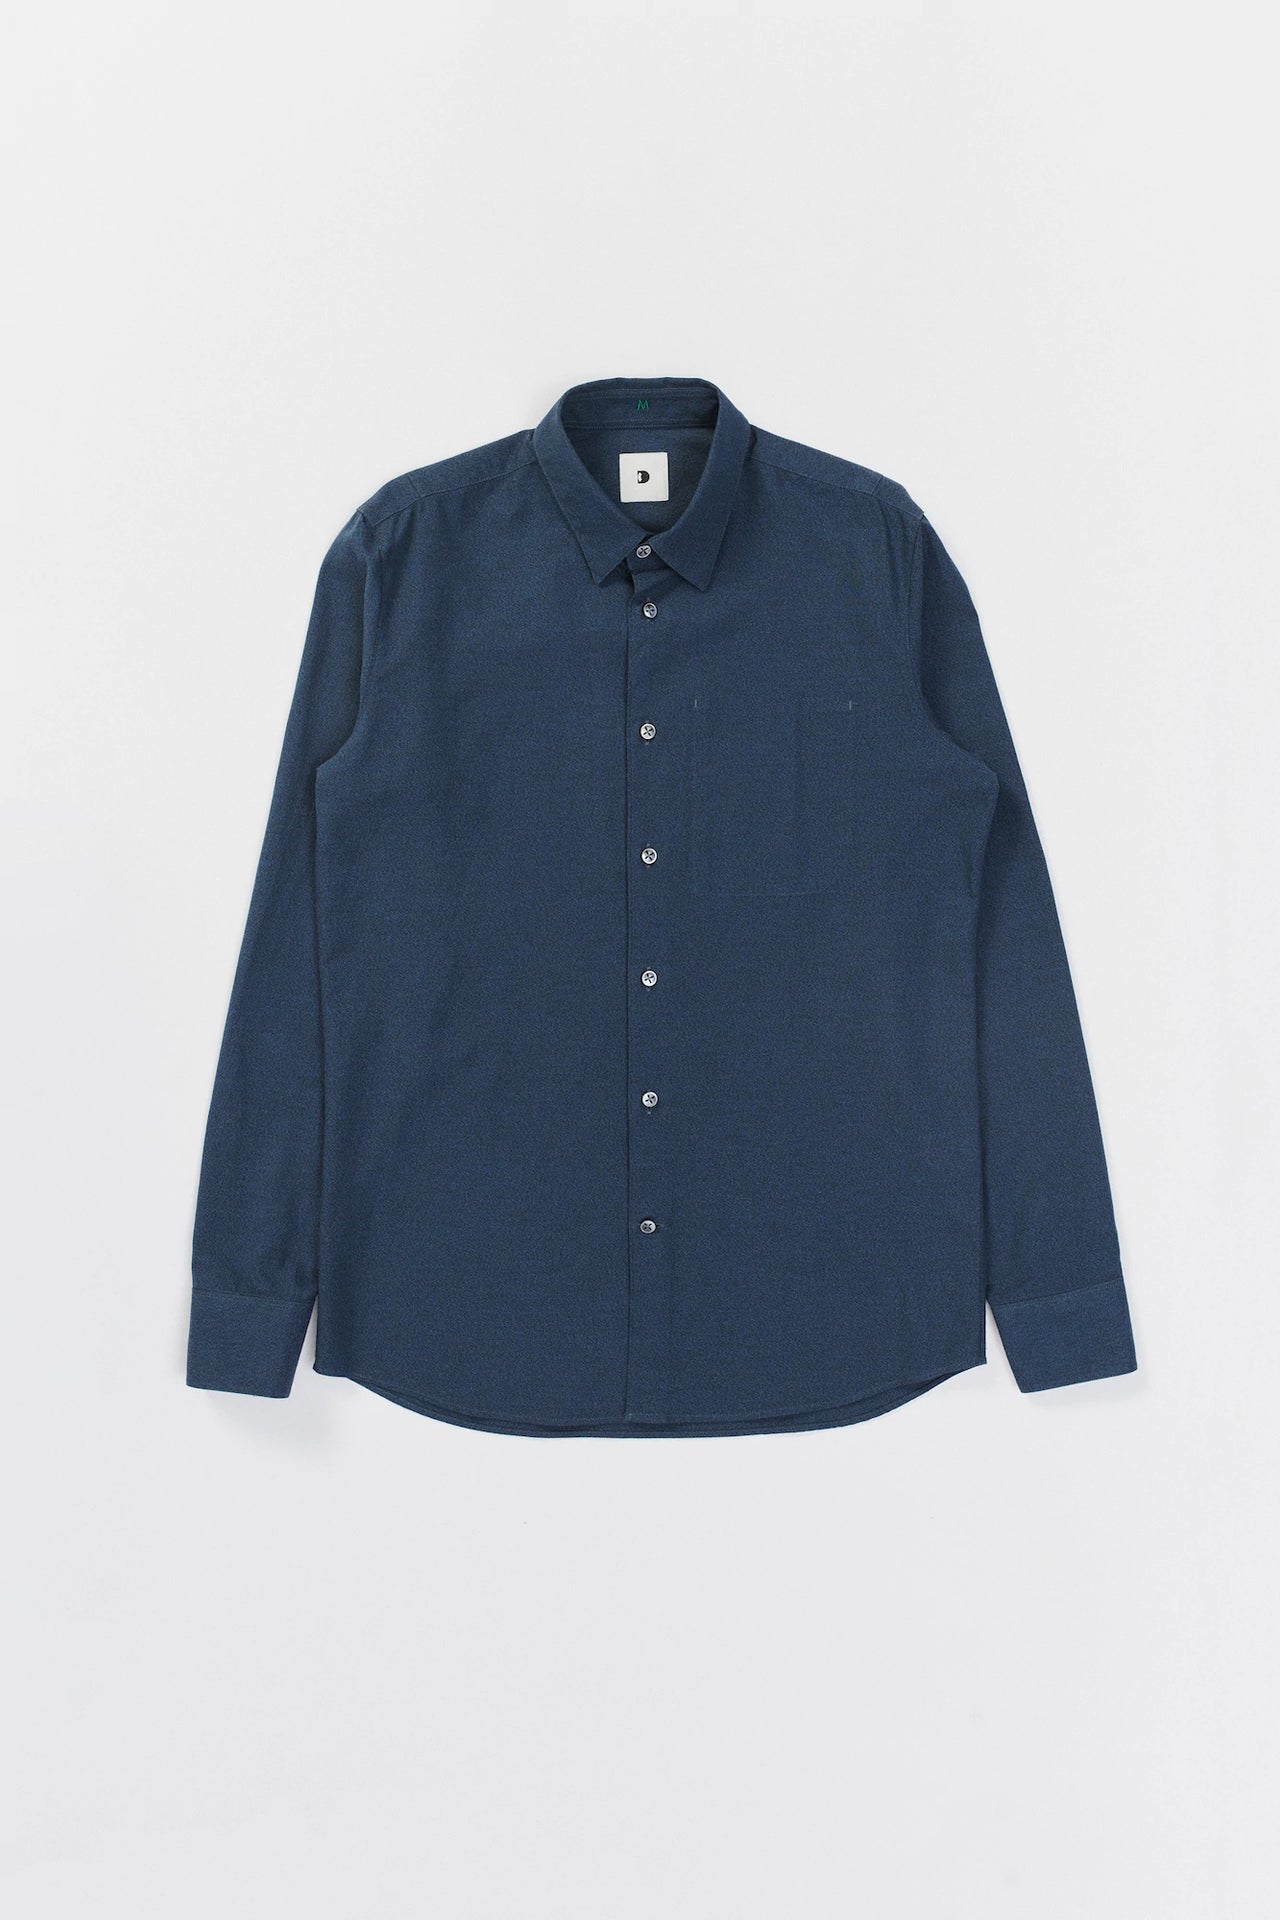 Feel Good Shirt in a Fine Deep Sea Blue and Black Thomas Mason Italian Cotton Oxford